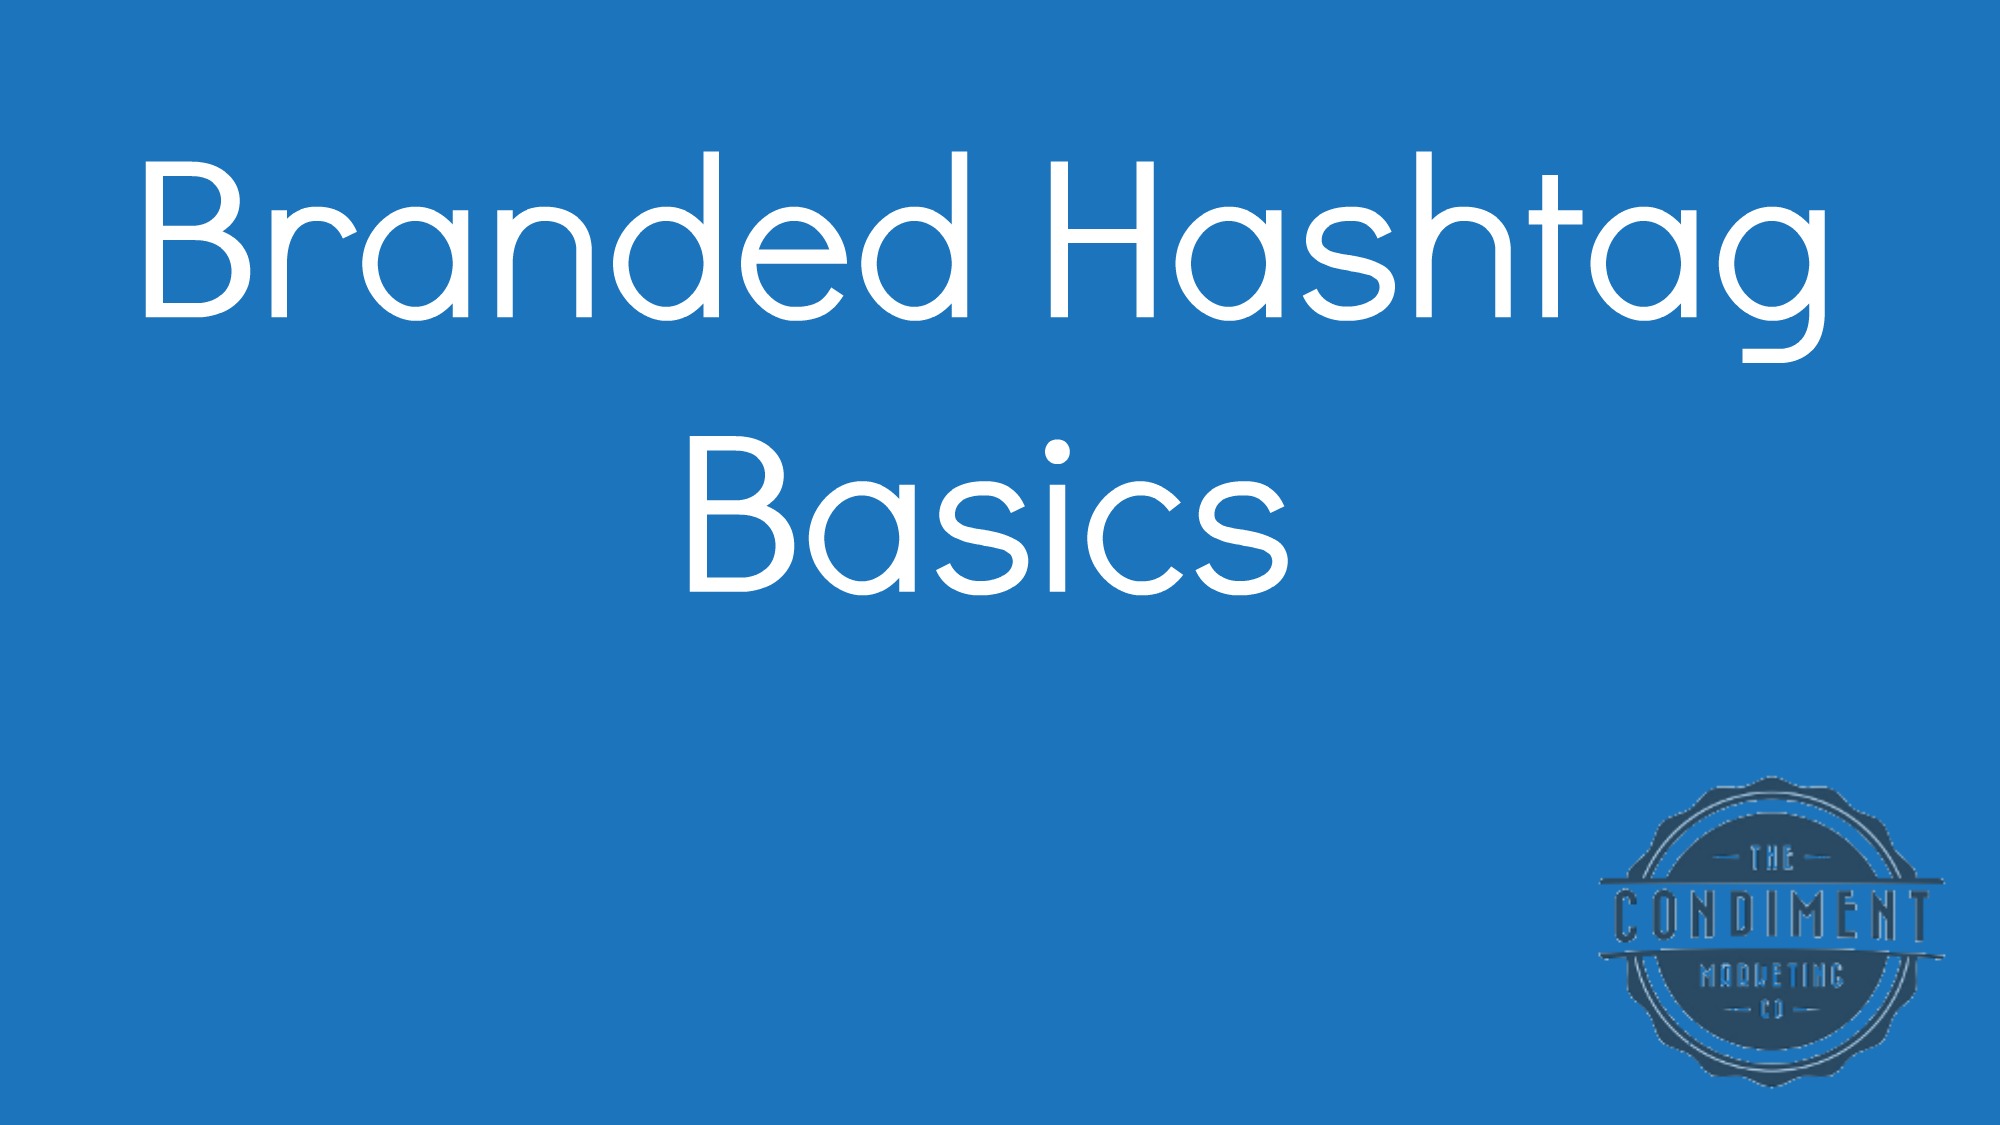 branded hashtag basics plain